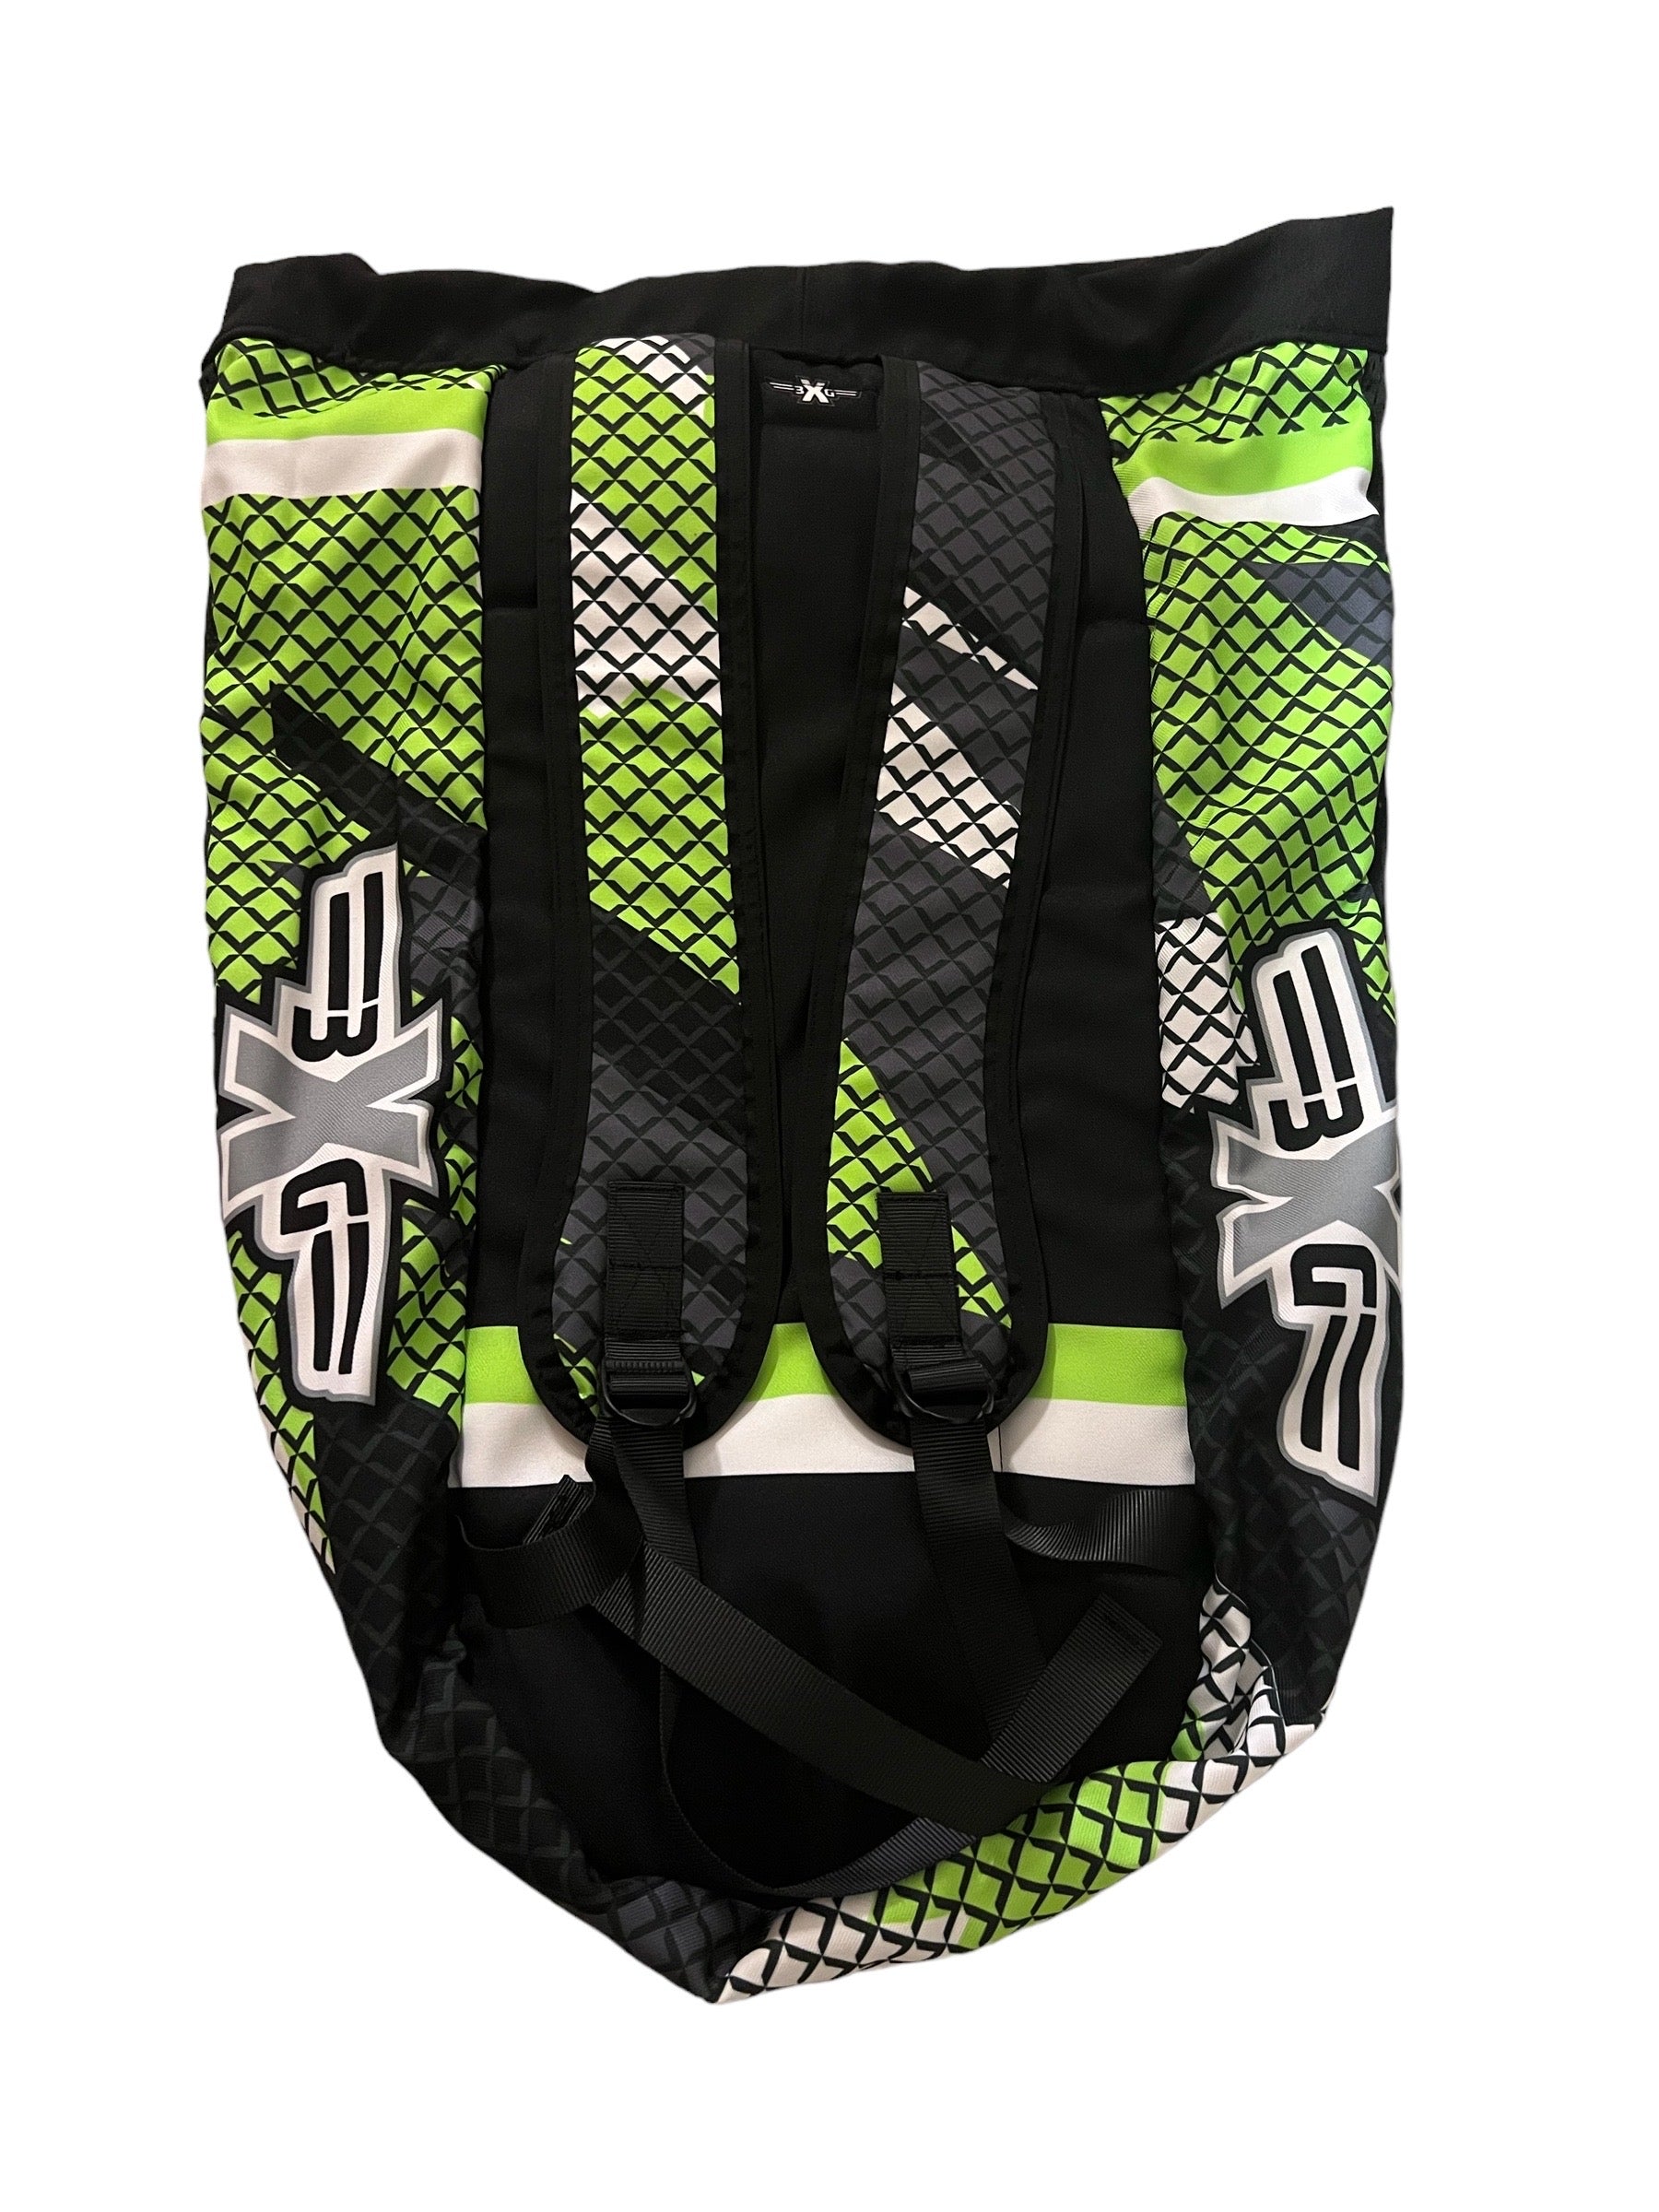 3x Gear Lime Green Gear Bag